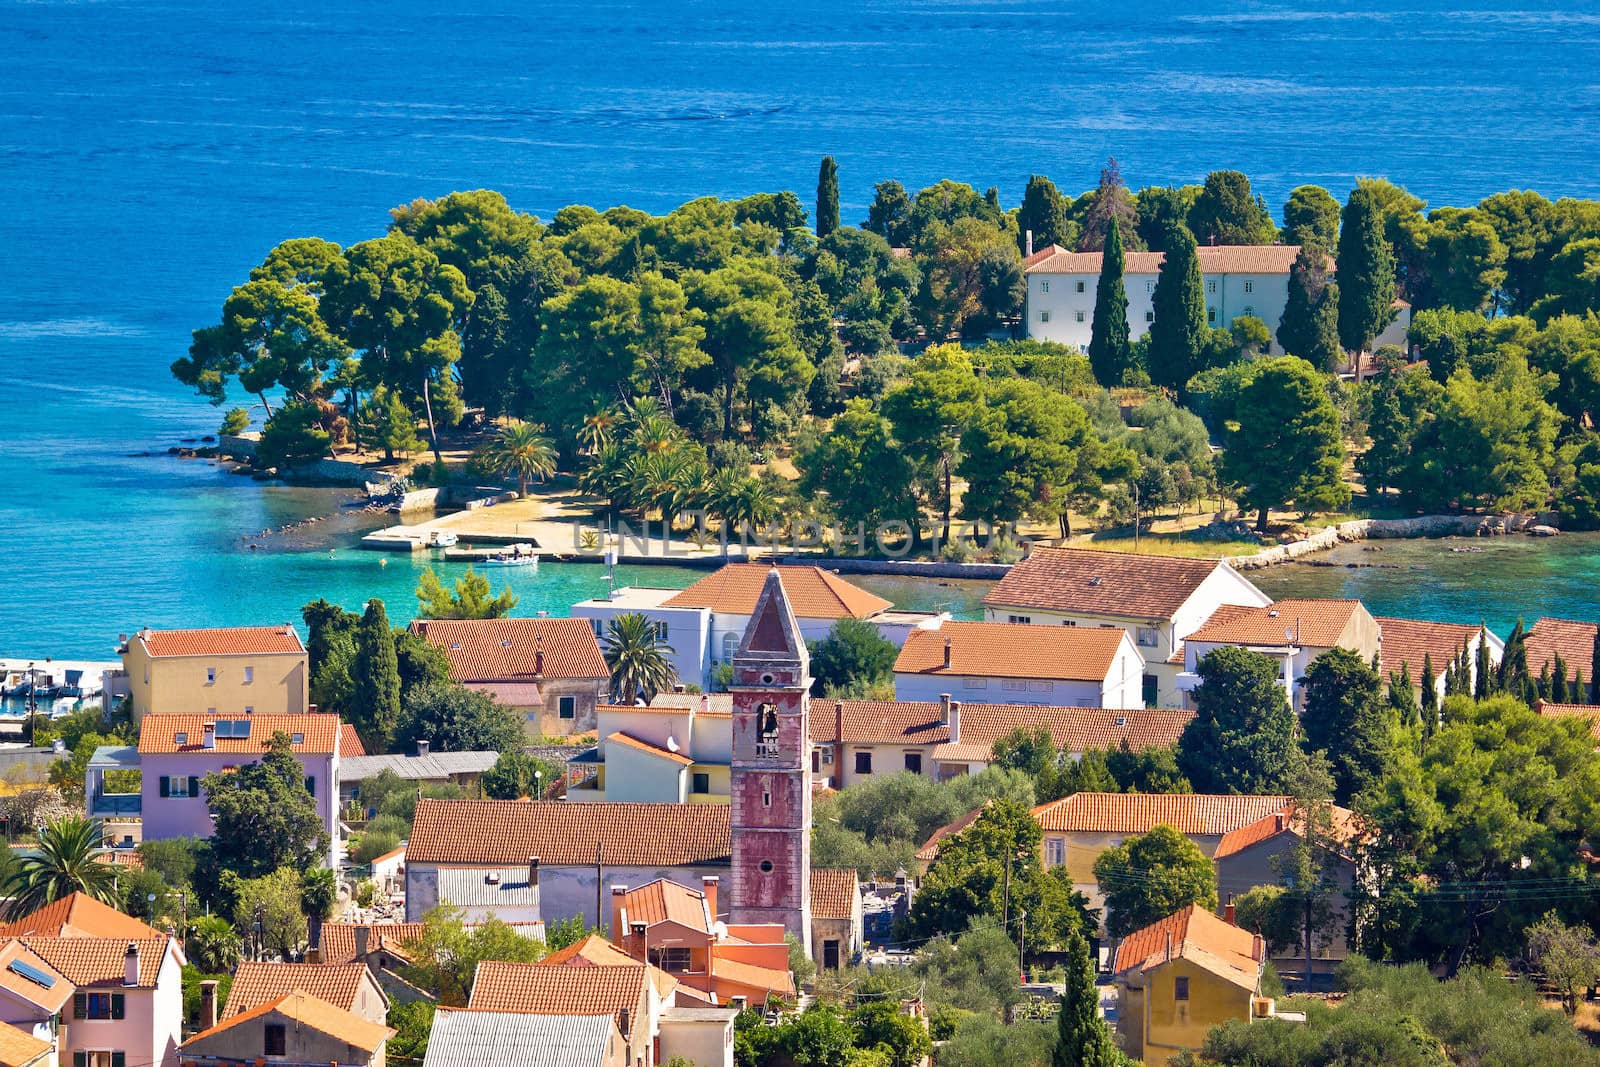 Beautiful coast of Croatia - Ugljan island in Dalmatia, Town of Preko